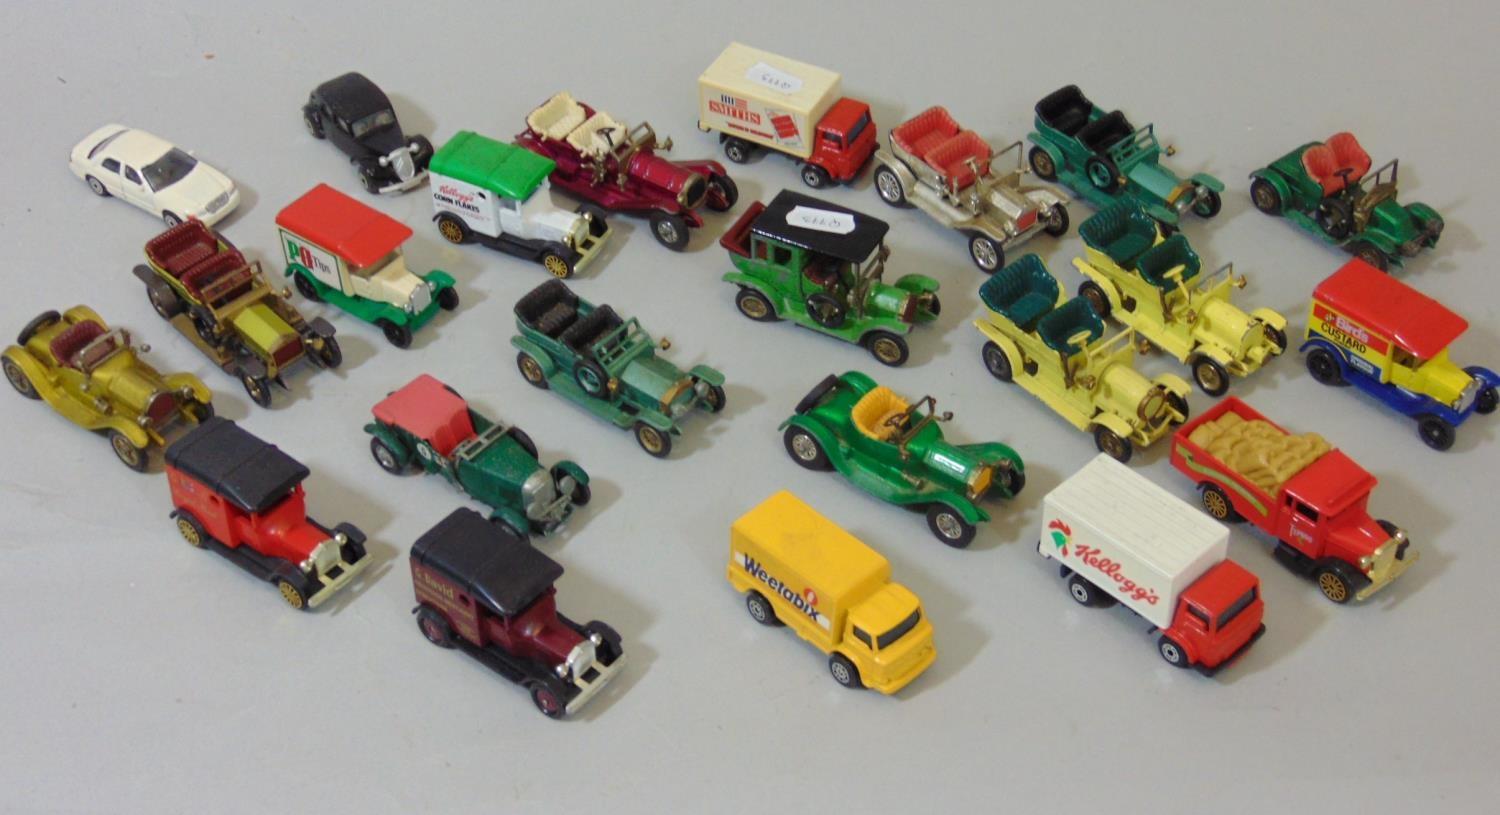 23 unboxed model vehicles by Lesney, Corgi, Matchbox, etc